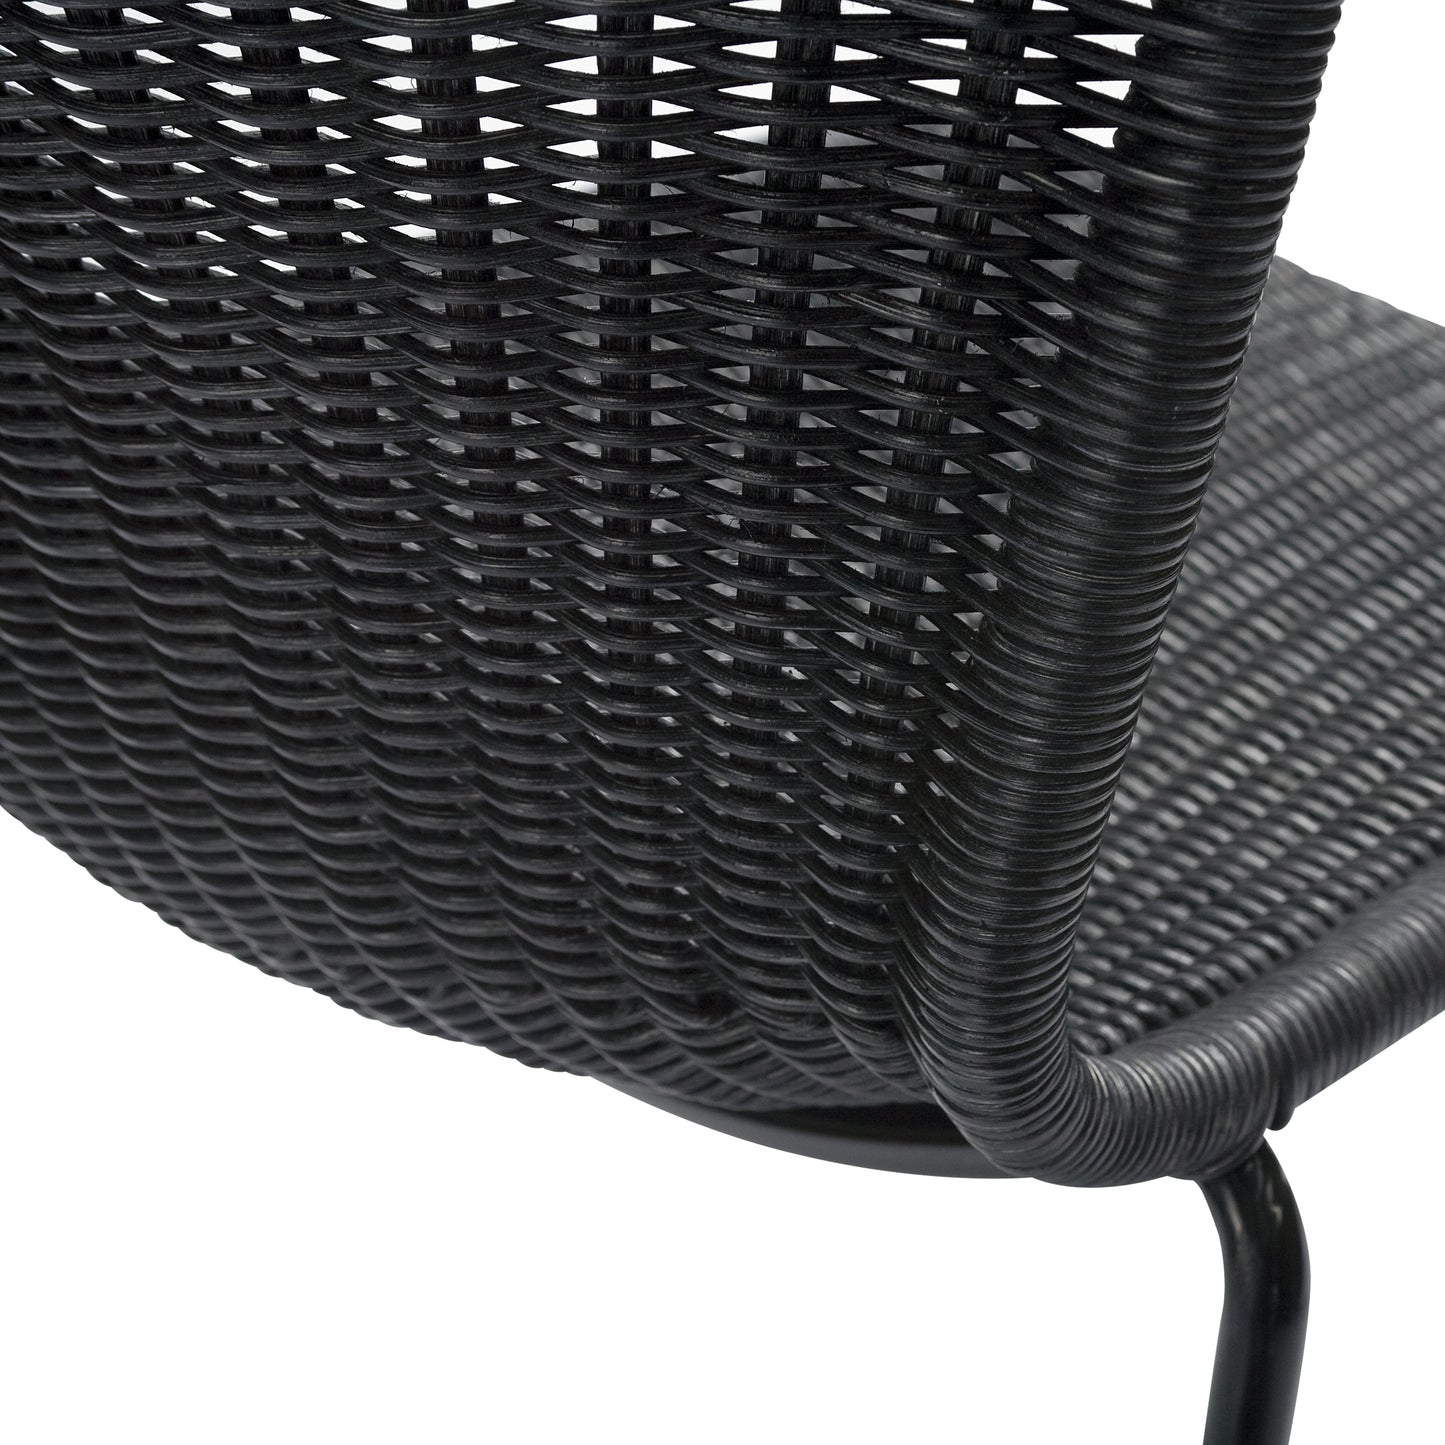 sleek all black rattan dining chair